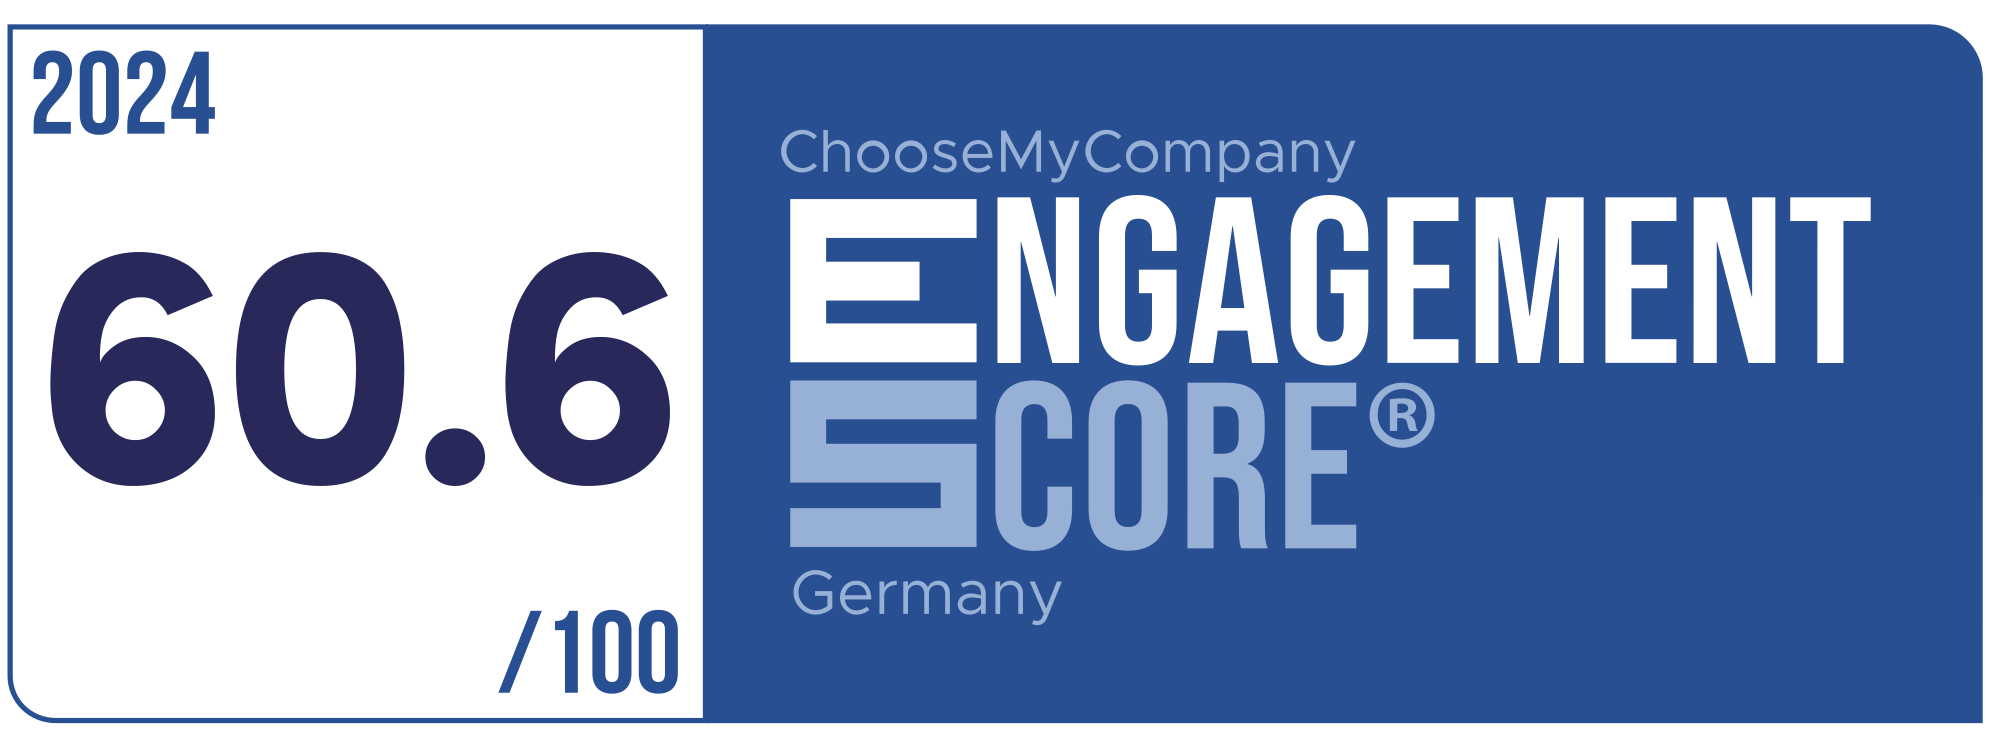 Label Engagement Score 2024 Germany